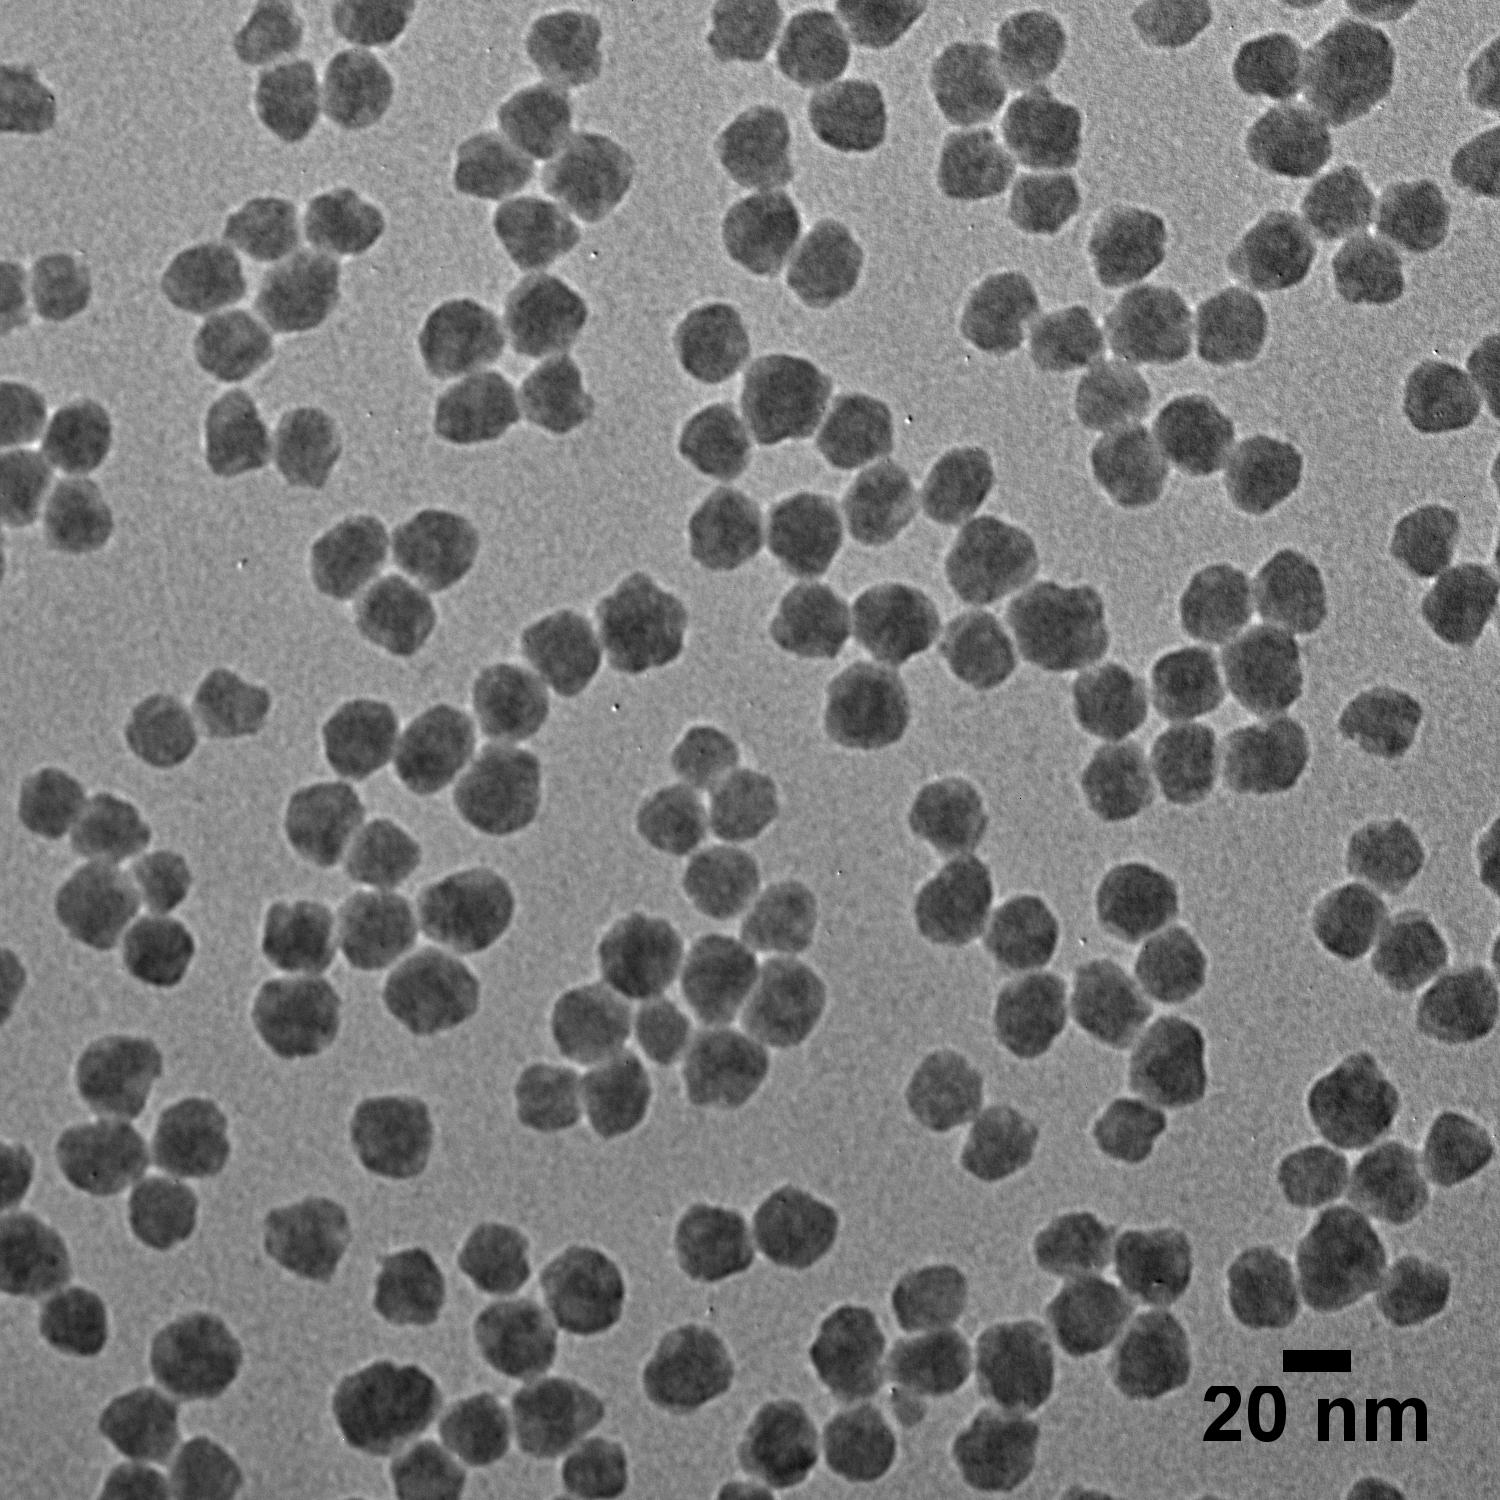 TEM image of 20 nm  NanoXact silica nanospheres.